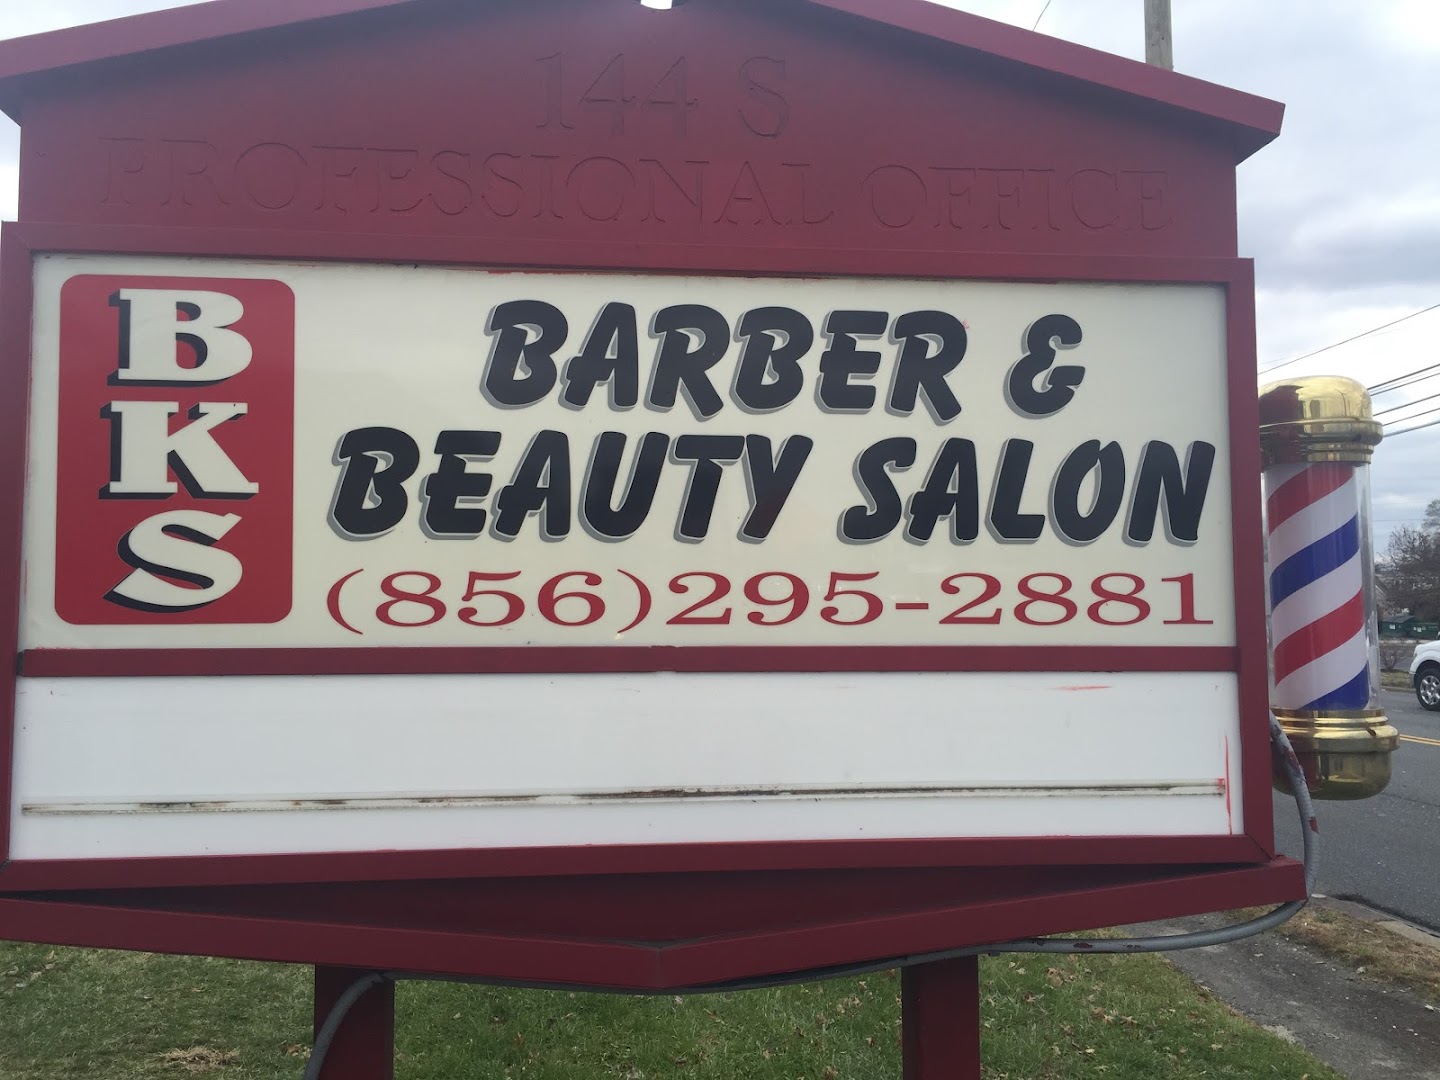 BKS Barber Shop & Beauty Salon